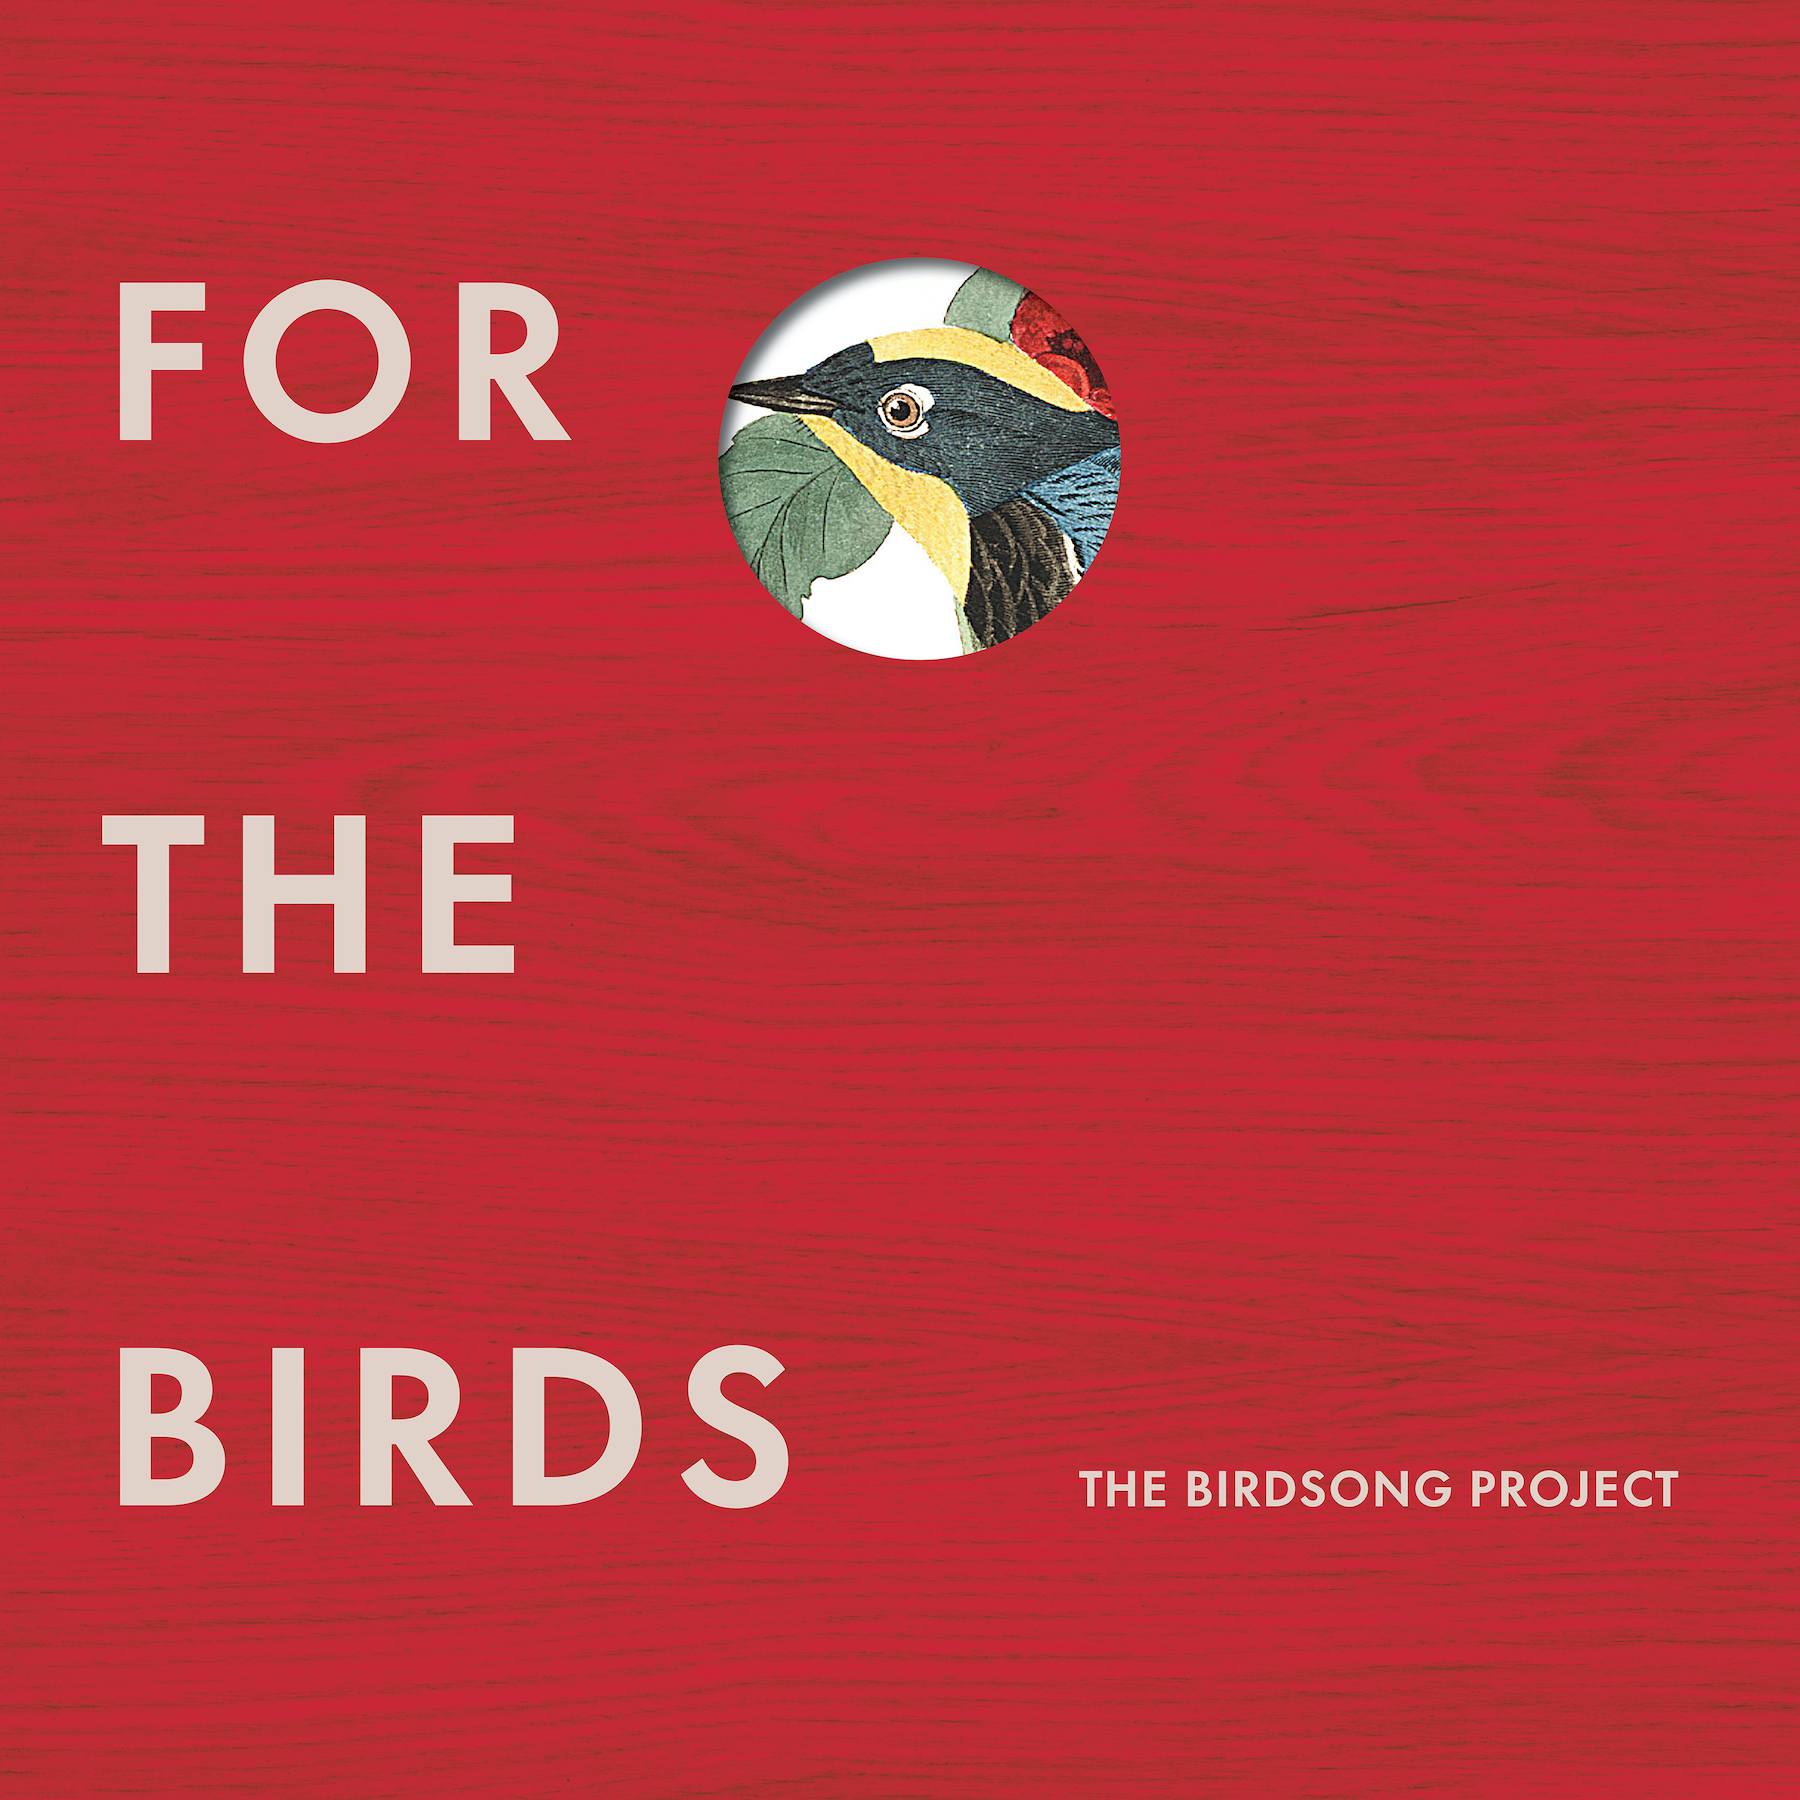 Listen to the Birds of Prey Soundtrack